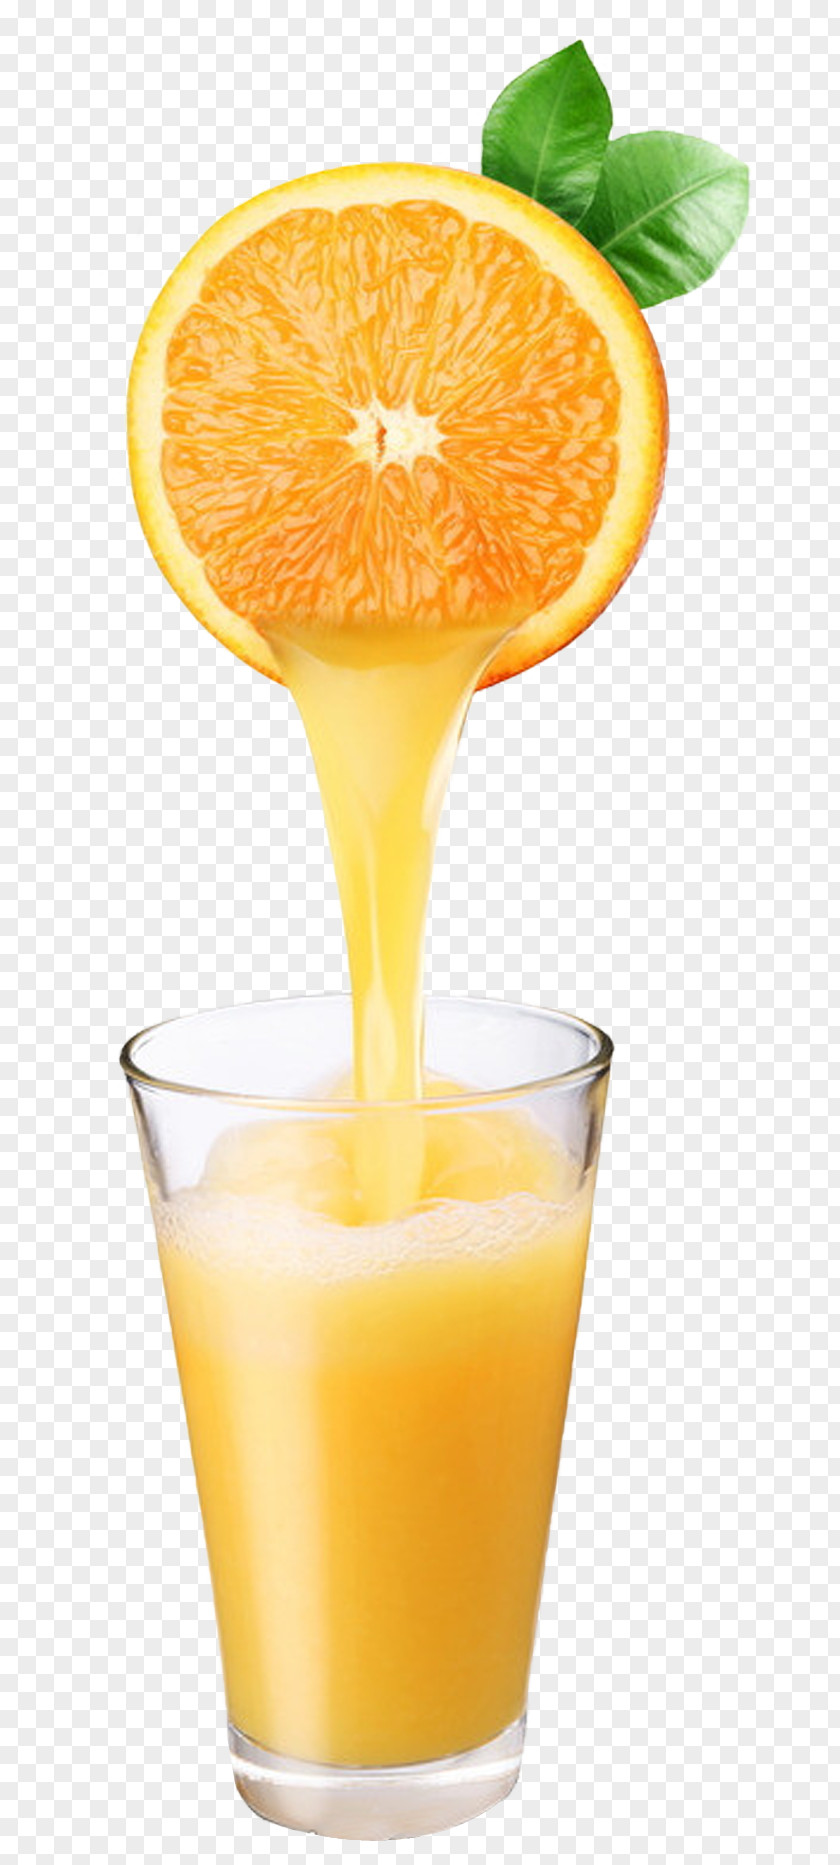 Ice Cream Cartoon Image Picture Material,Orange Juice Orange Soft Drink Smoothie Fruit PNG